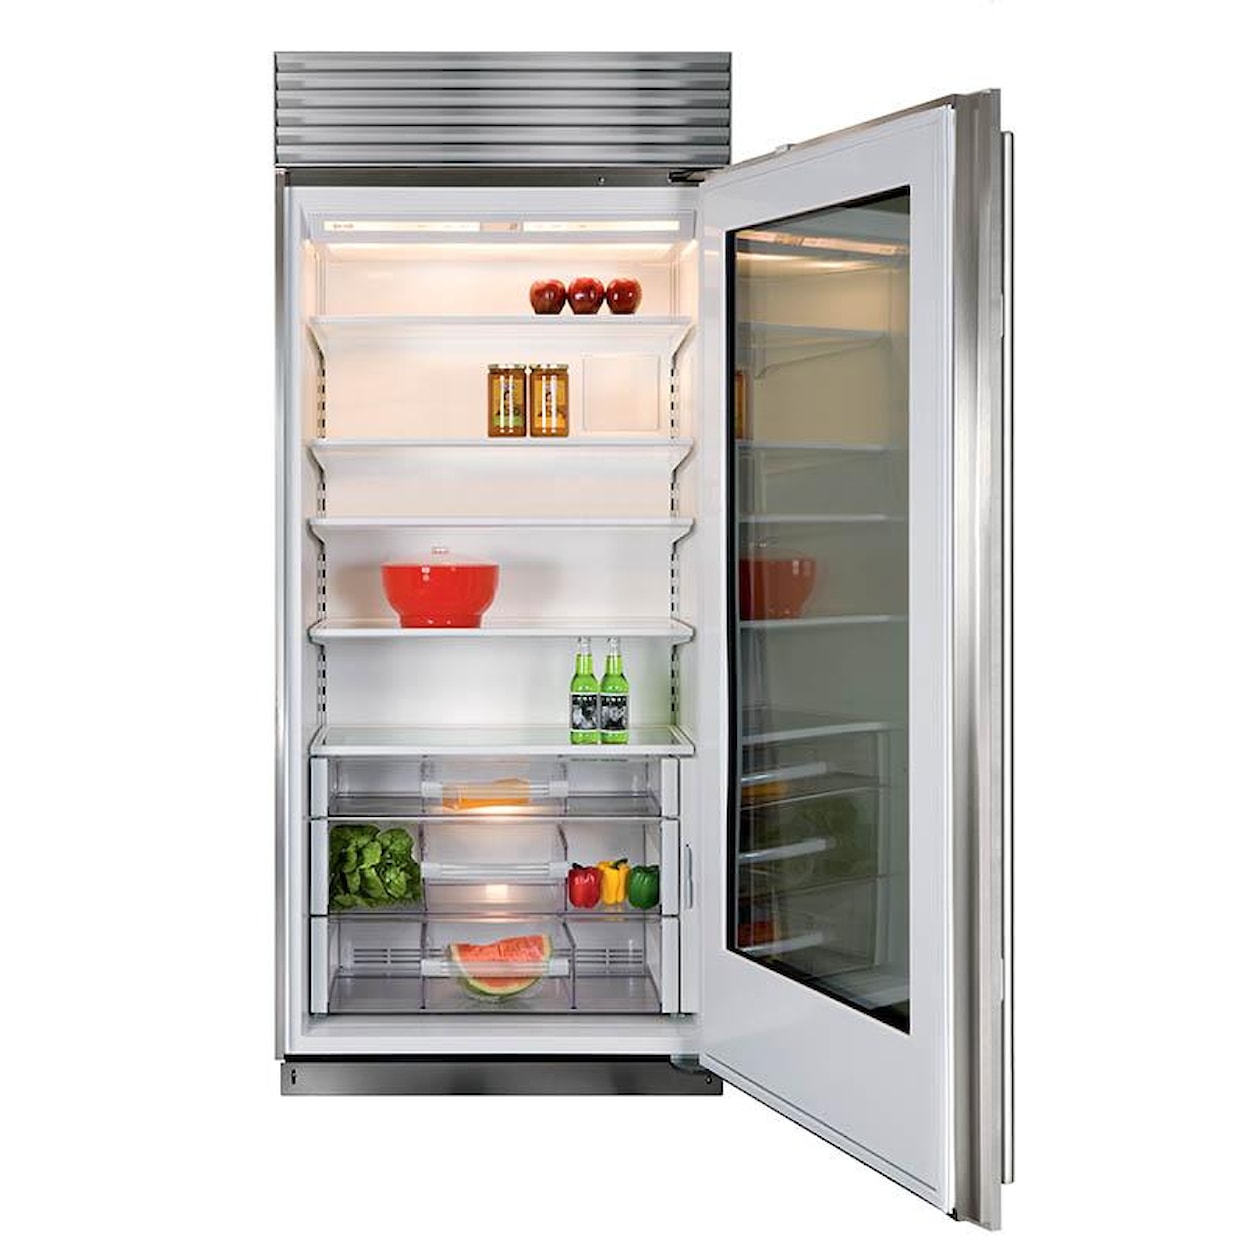 Sub-Zero Built-In Refrigerators 23.3 Cu. Ft. All Refrigerator